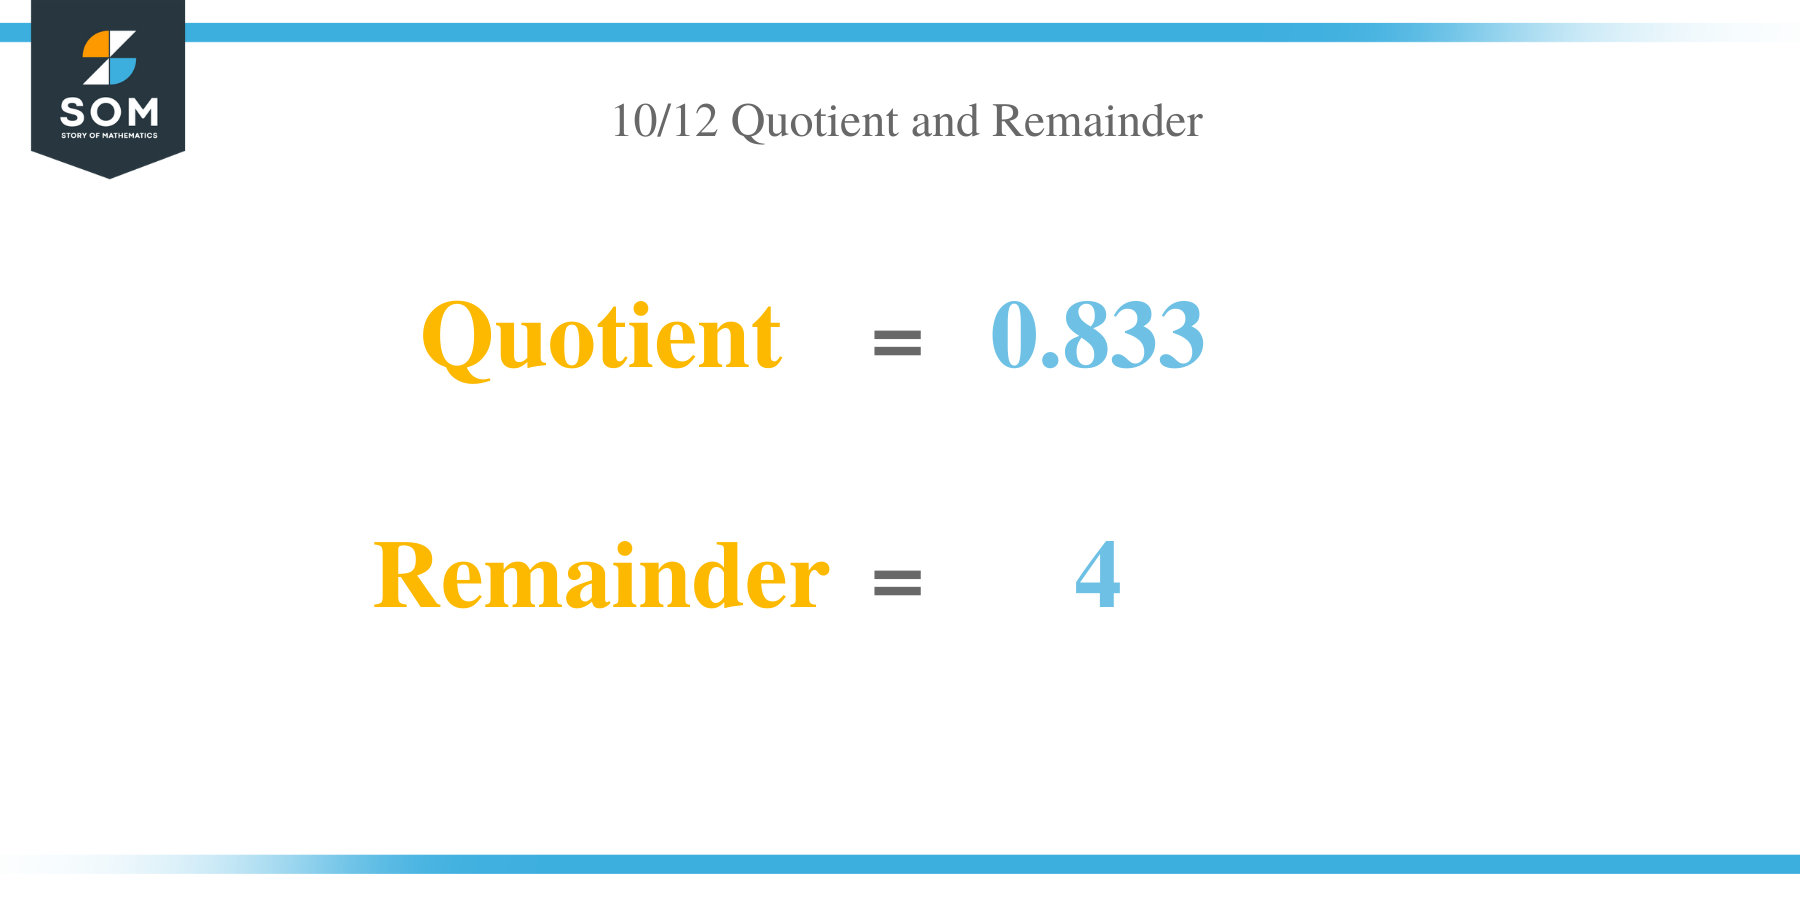 Quotient and Remainder of 10 per 12